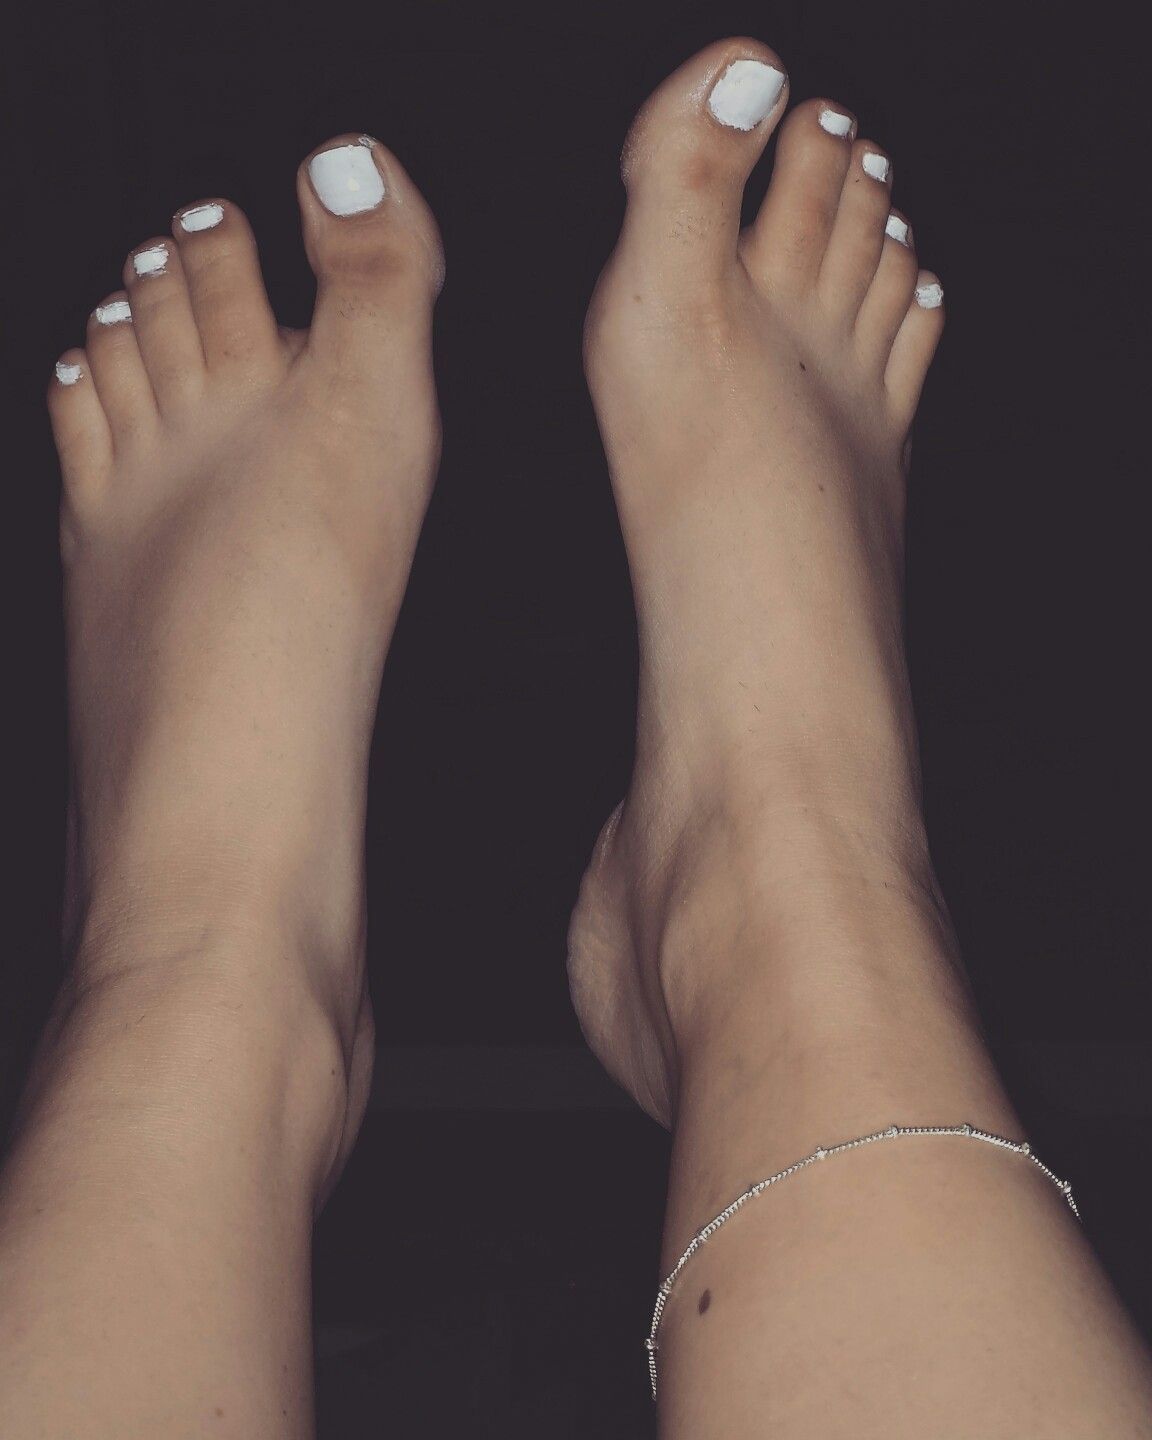 Chipped polish foot fetish